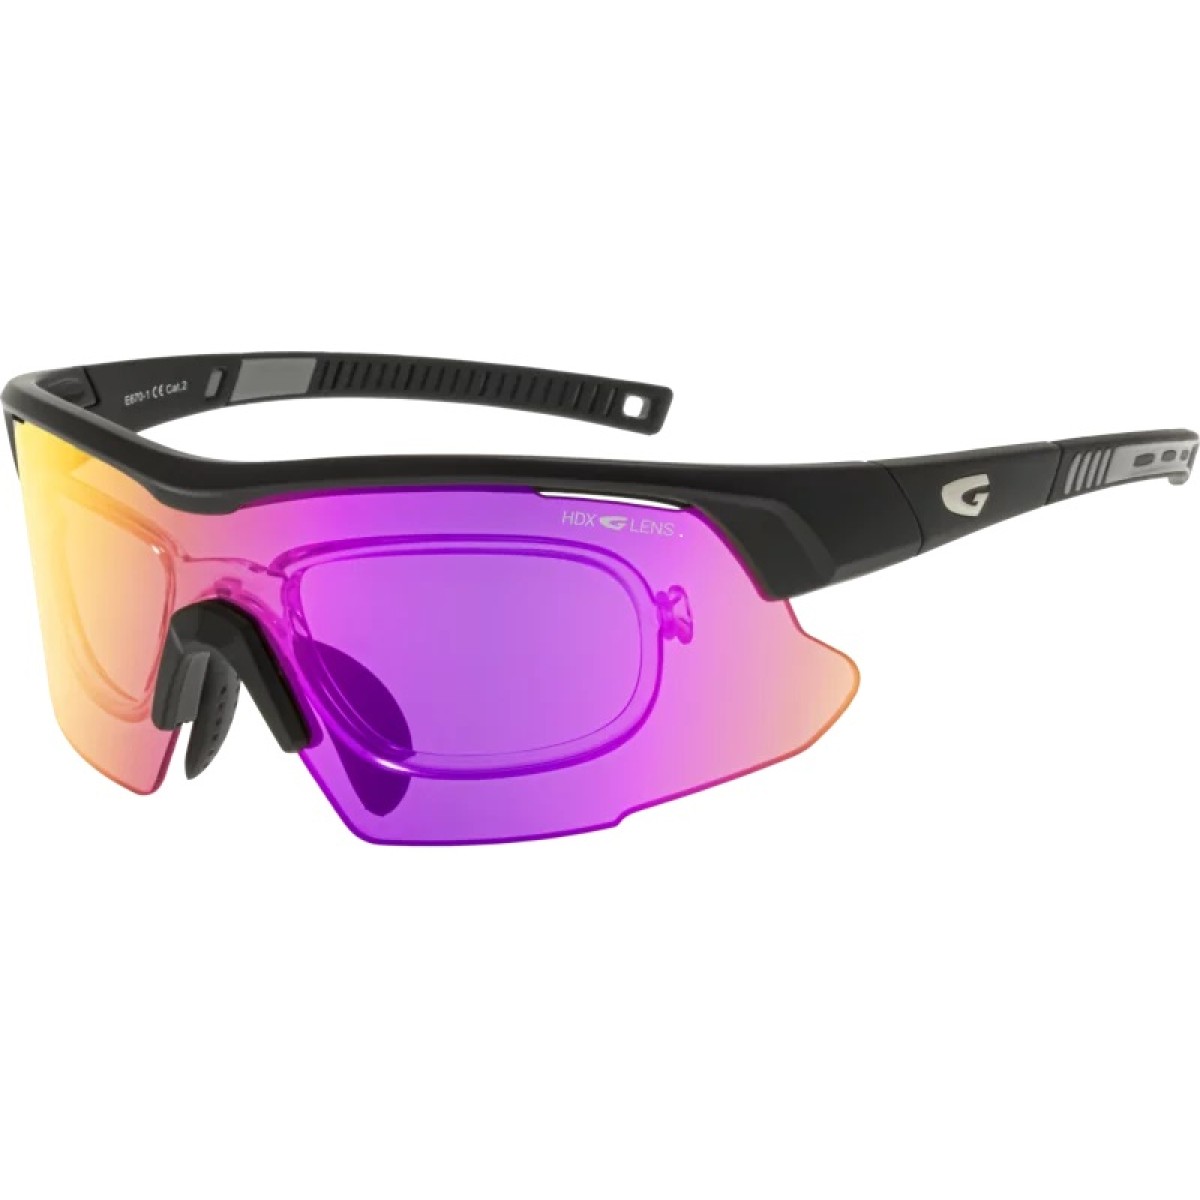 Optic sunglasses E670-1R GOG - view 1